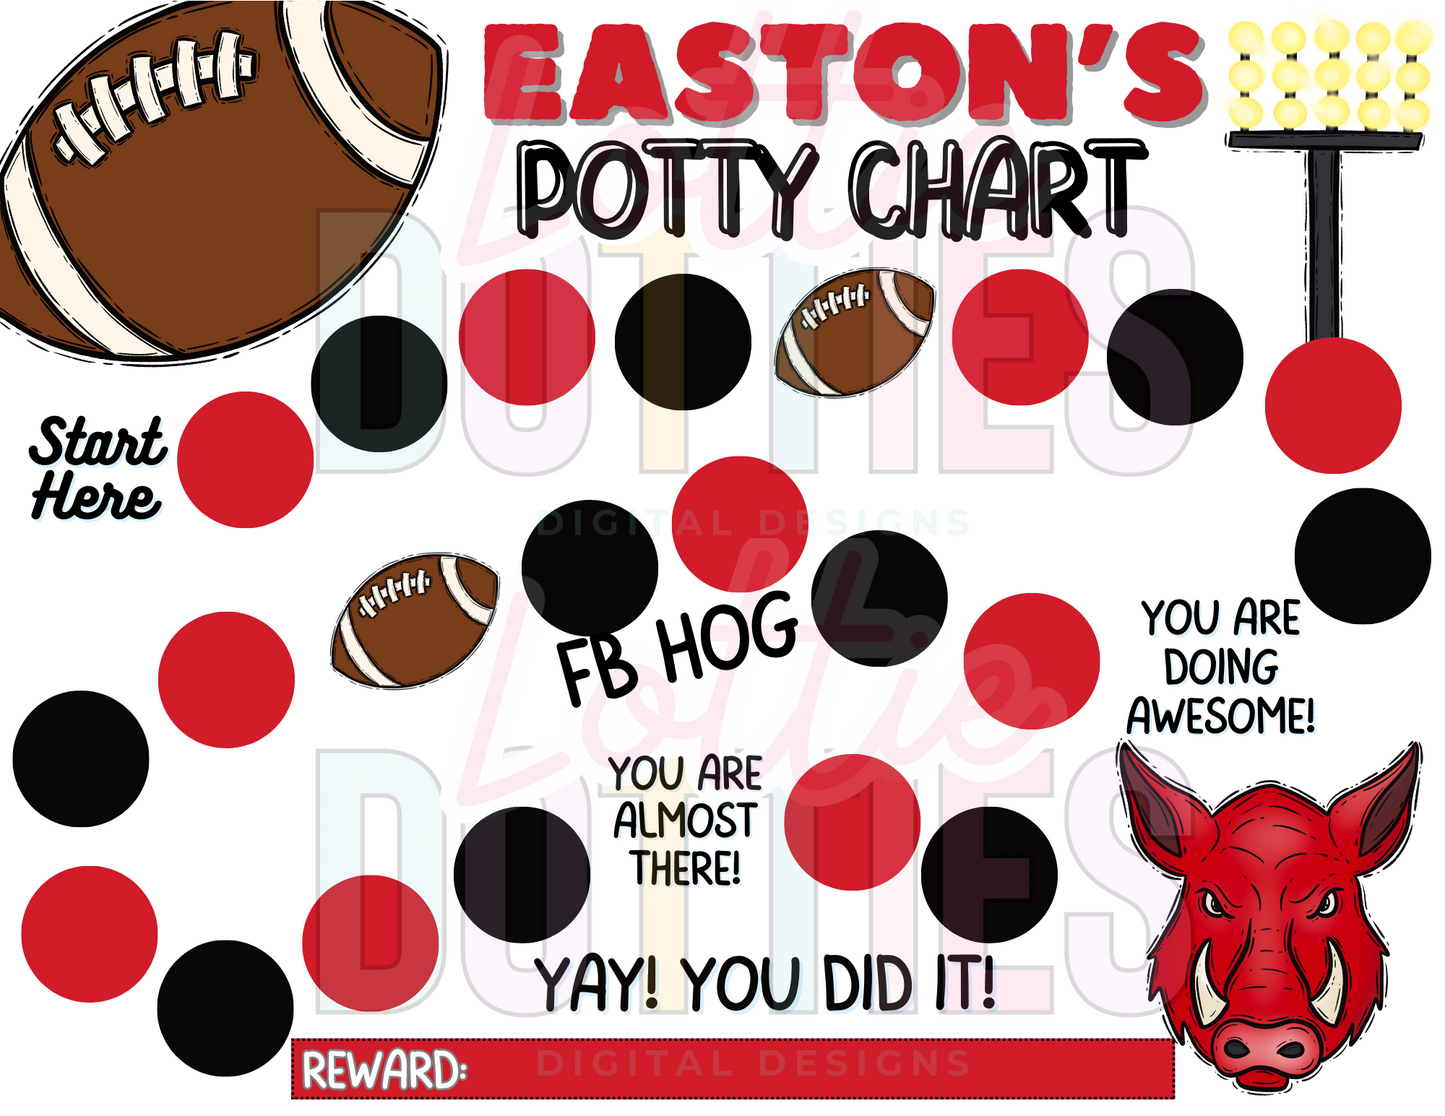 Football Razorback/Hog Potty Chart Template - FB Hog